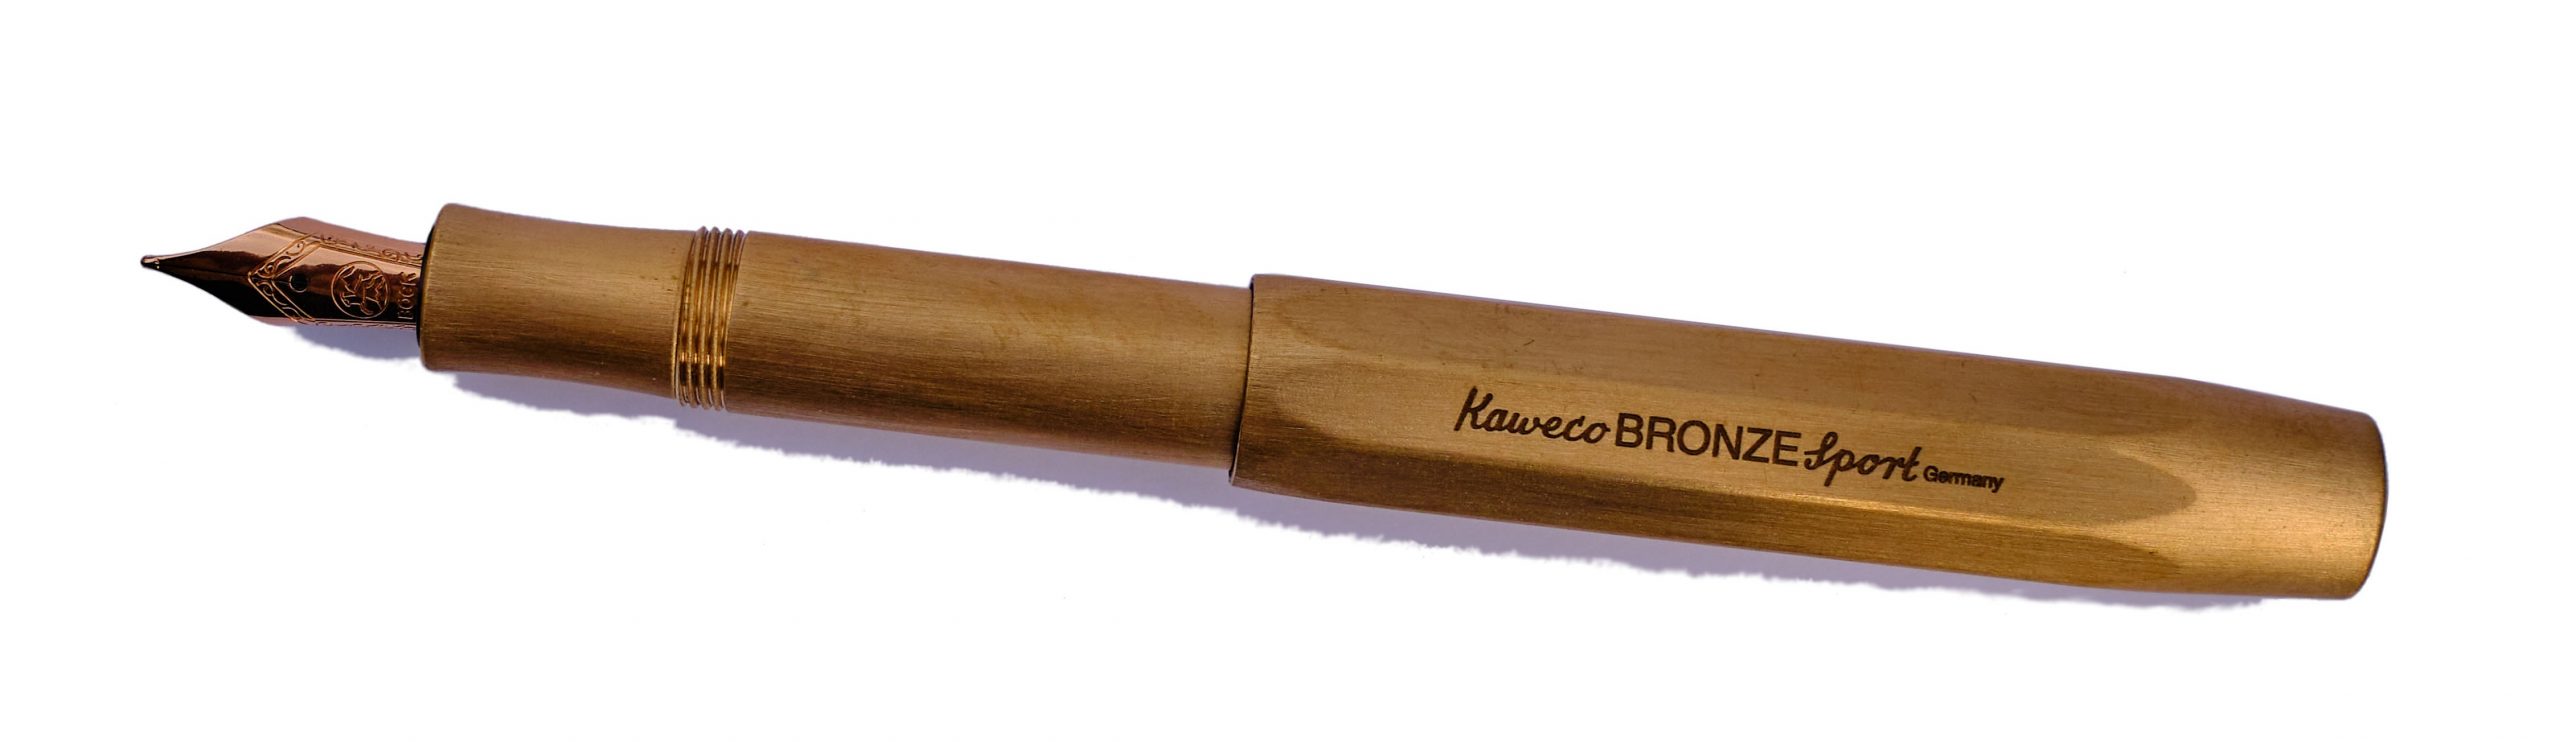 Kaweco, Bronze Sport Fountain Pen